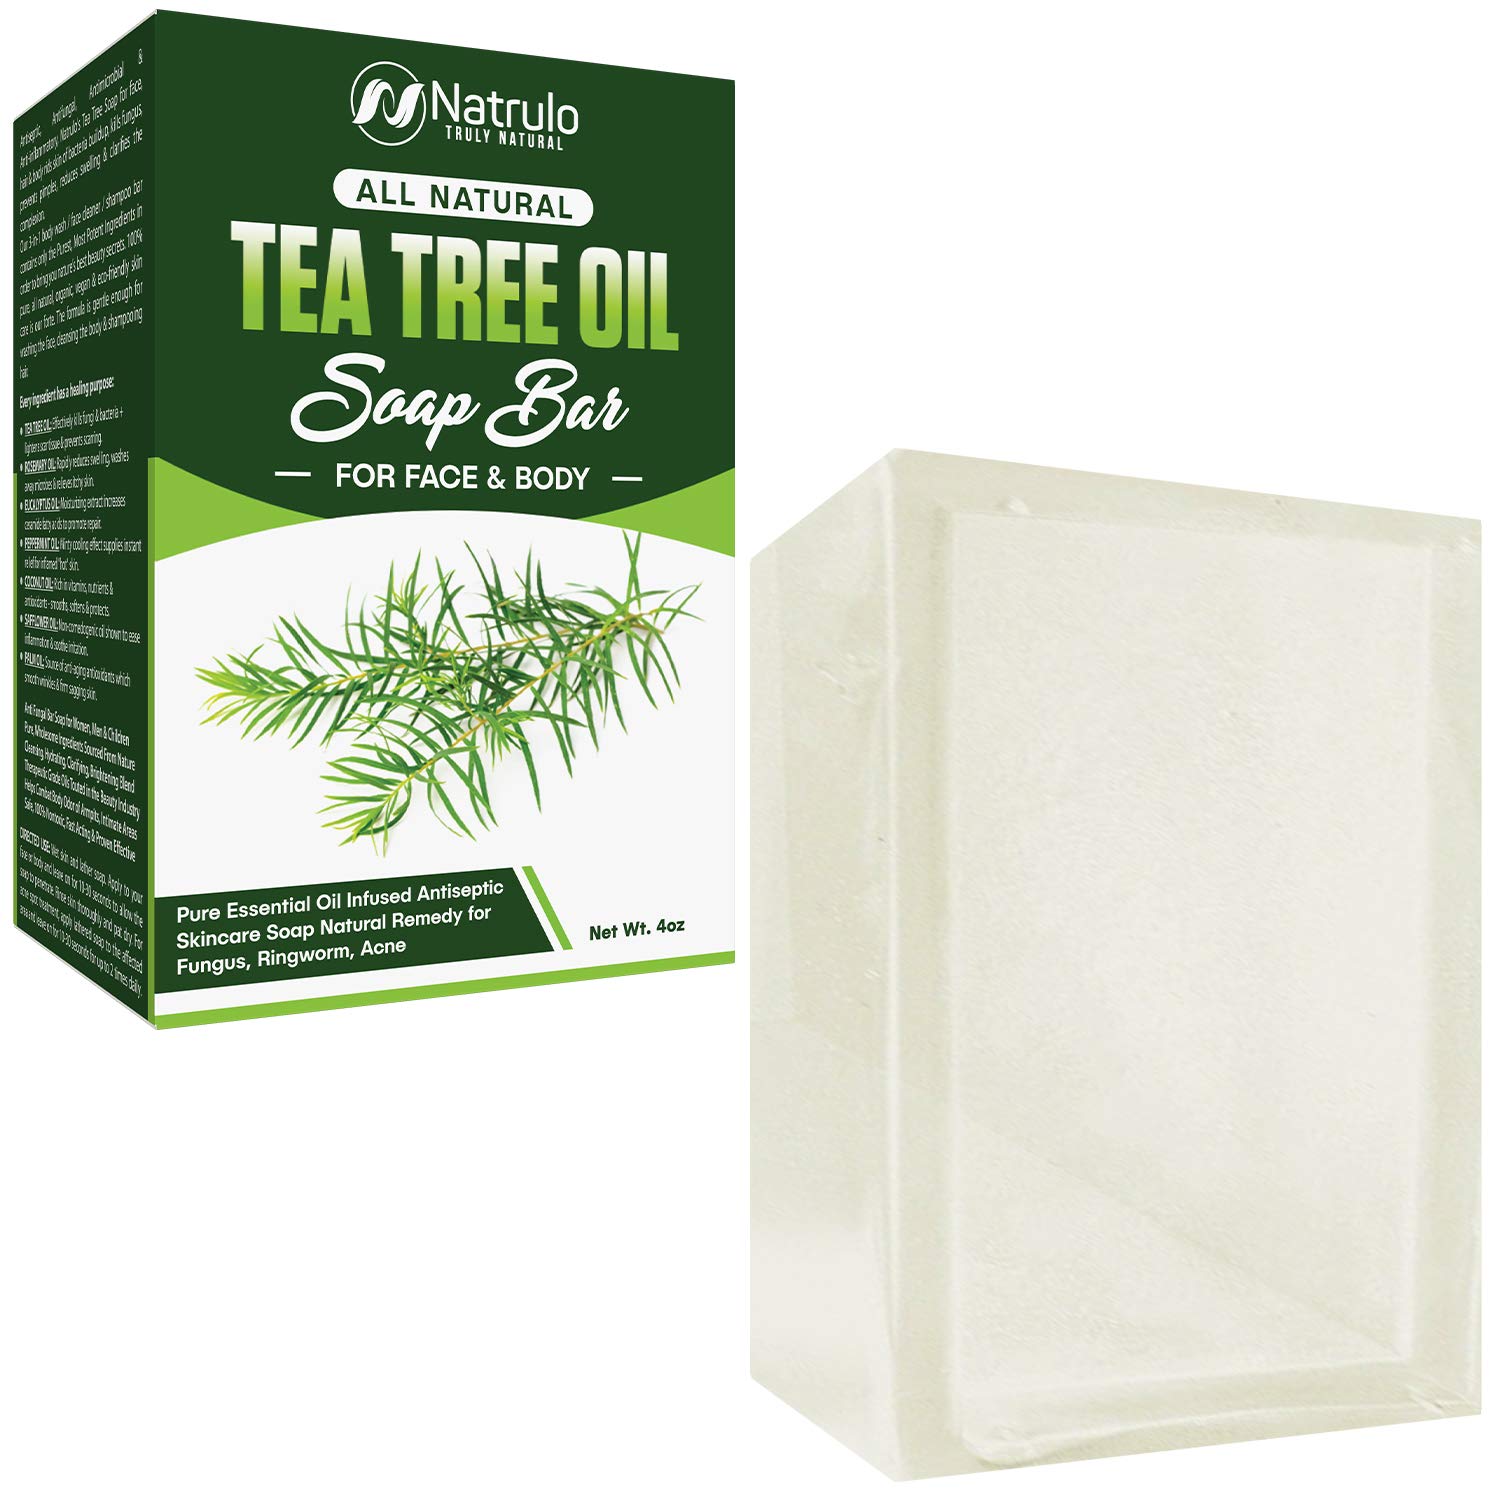 Tea Tree Soap Benefits